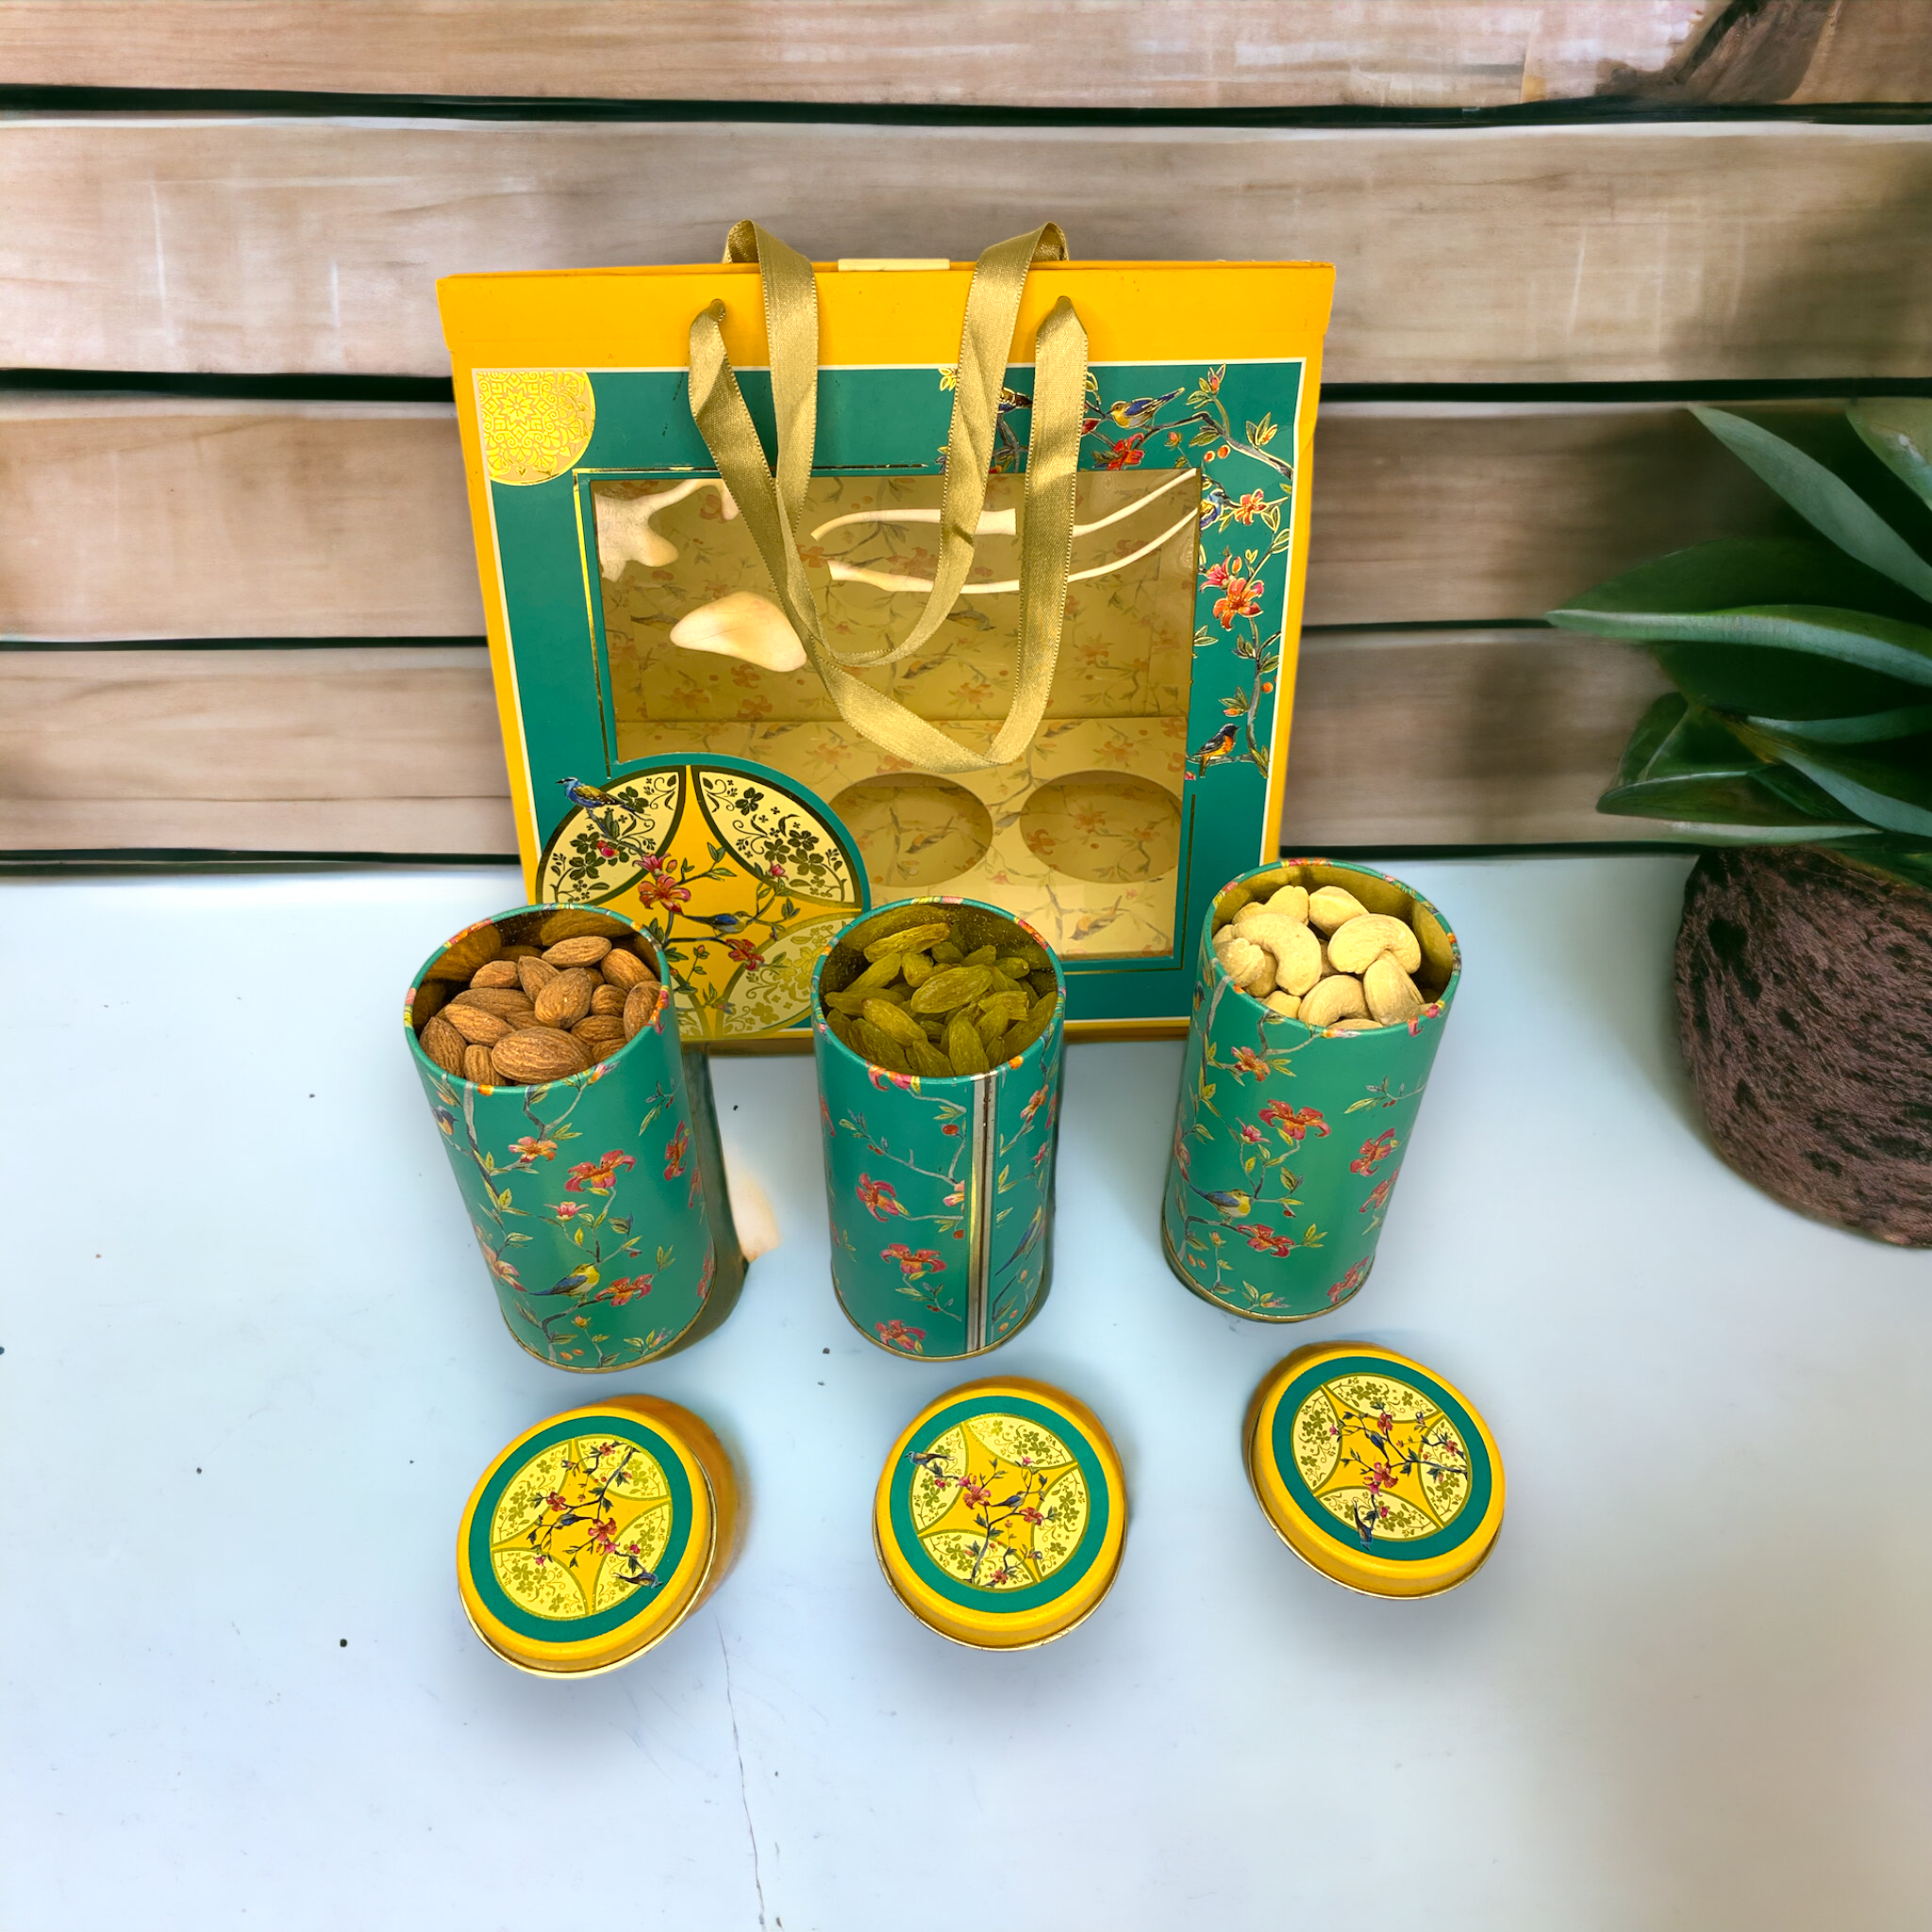 Printed Pyramid Box with Dryfruits: 3 Jars